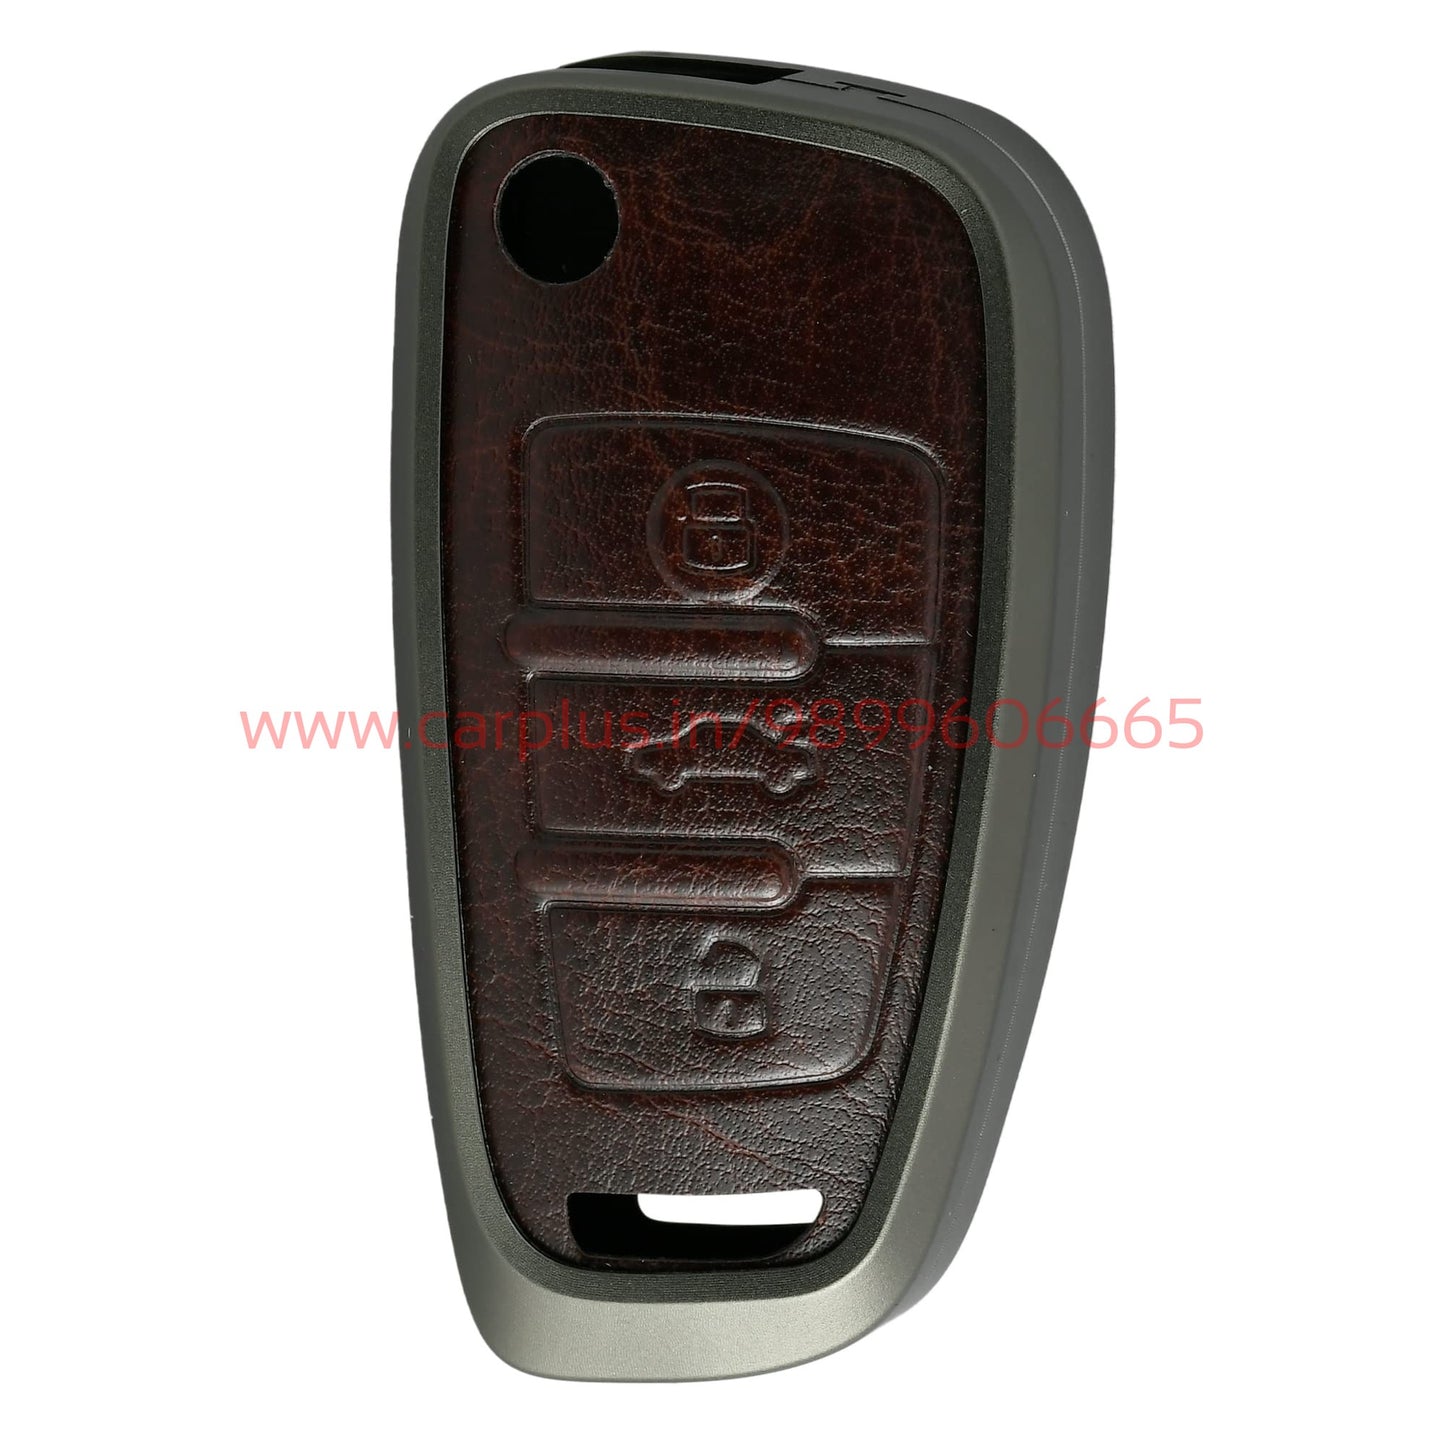 
                  
                    KMH Aluminium Alloy with Leather Car Key Cover Compatible for Audi A1 A3 A6 Q2 Q3 Q7 TT TTS R8 S3 S6 RS3 3 Button Smart Key-TPU ALUMINIUM KEY COVER-KMH-Gun Brown-Without Key Chain-CARPLUS
                  
                